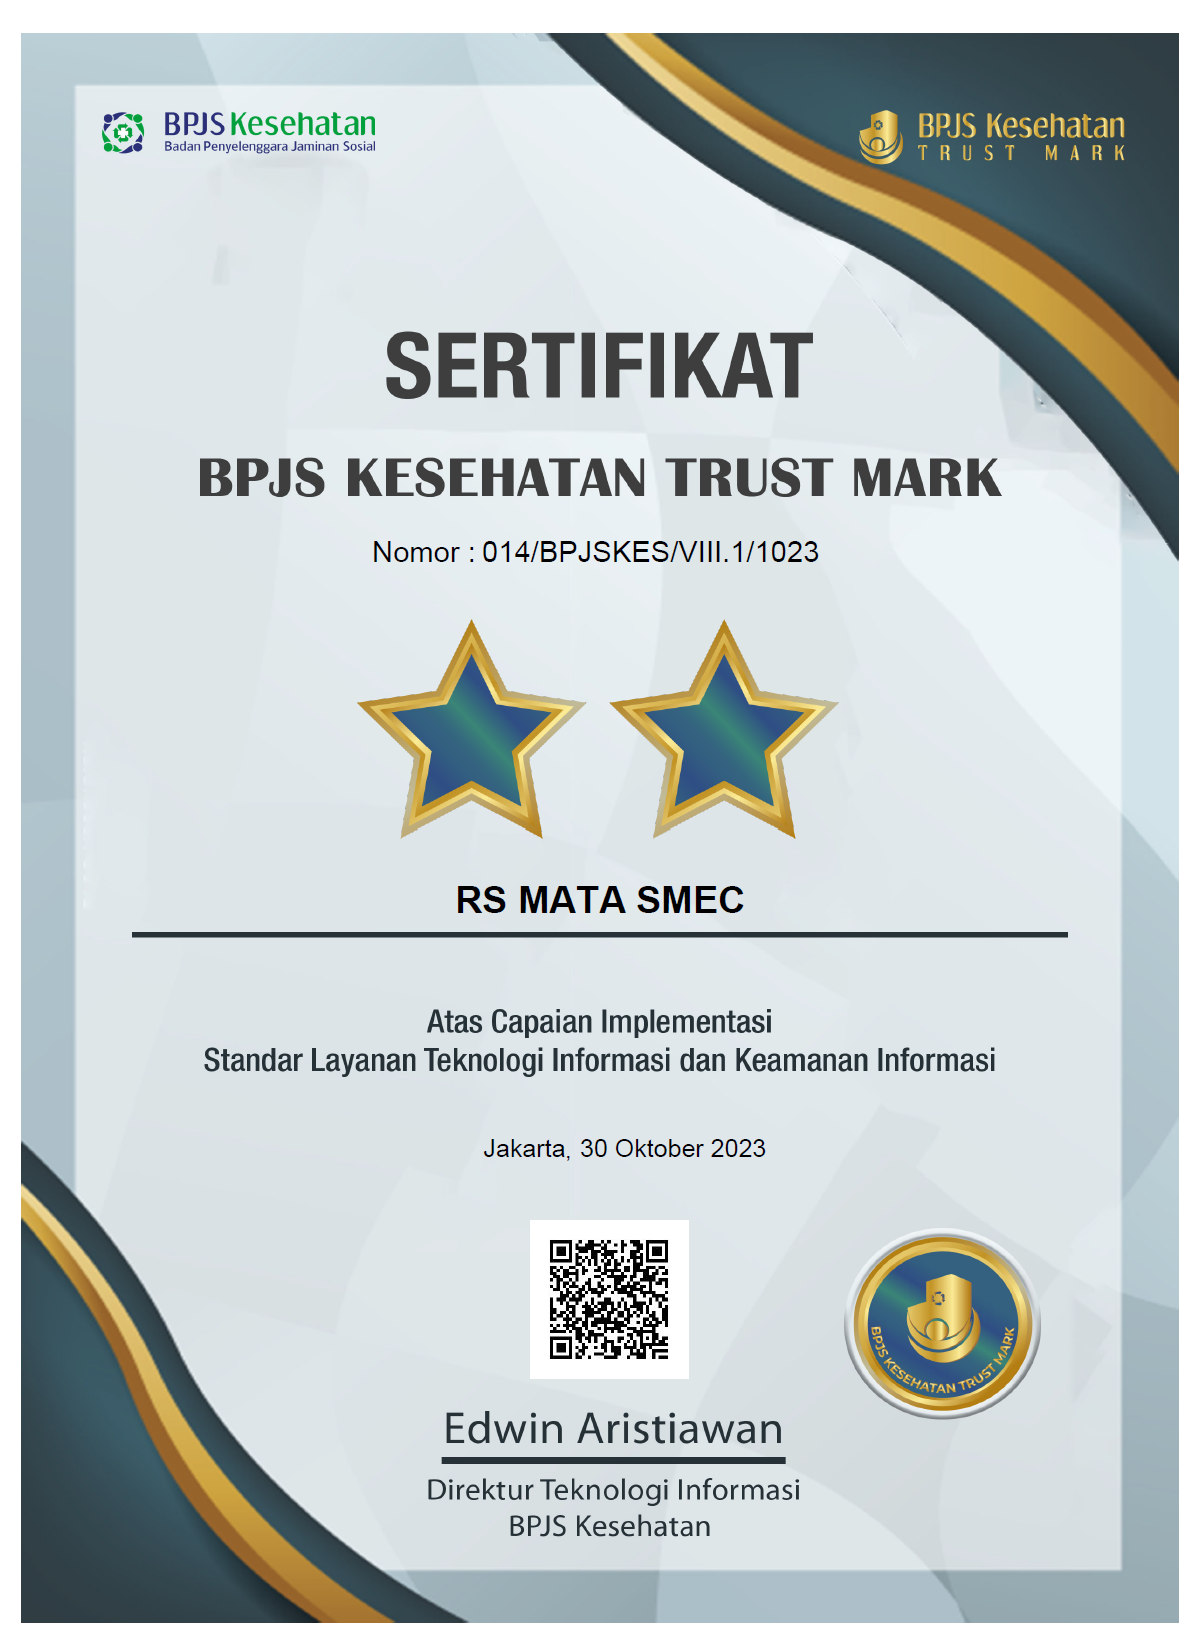 BPJS Kesehatan Trust Mark Certificate.png